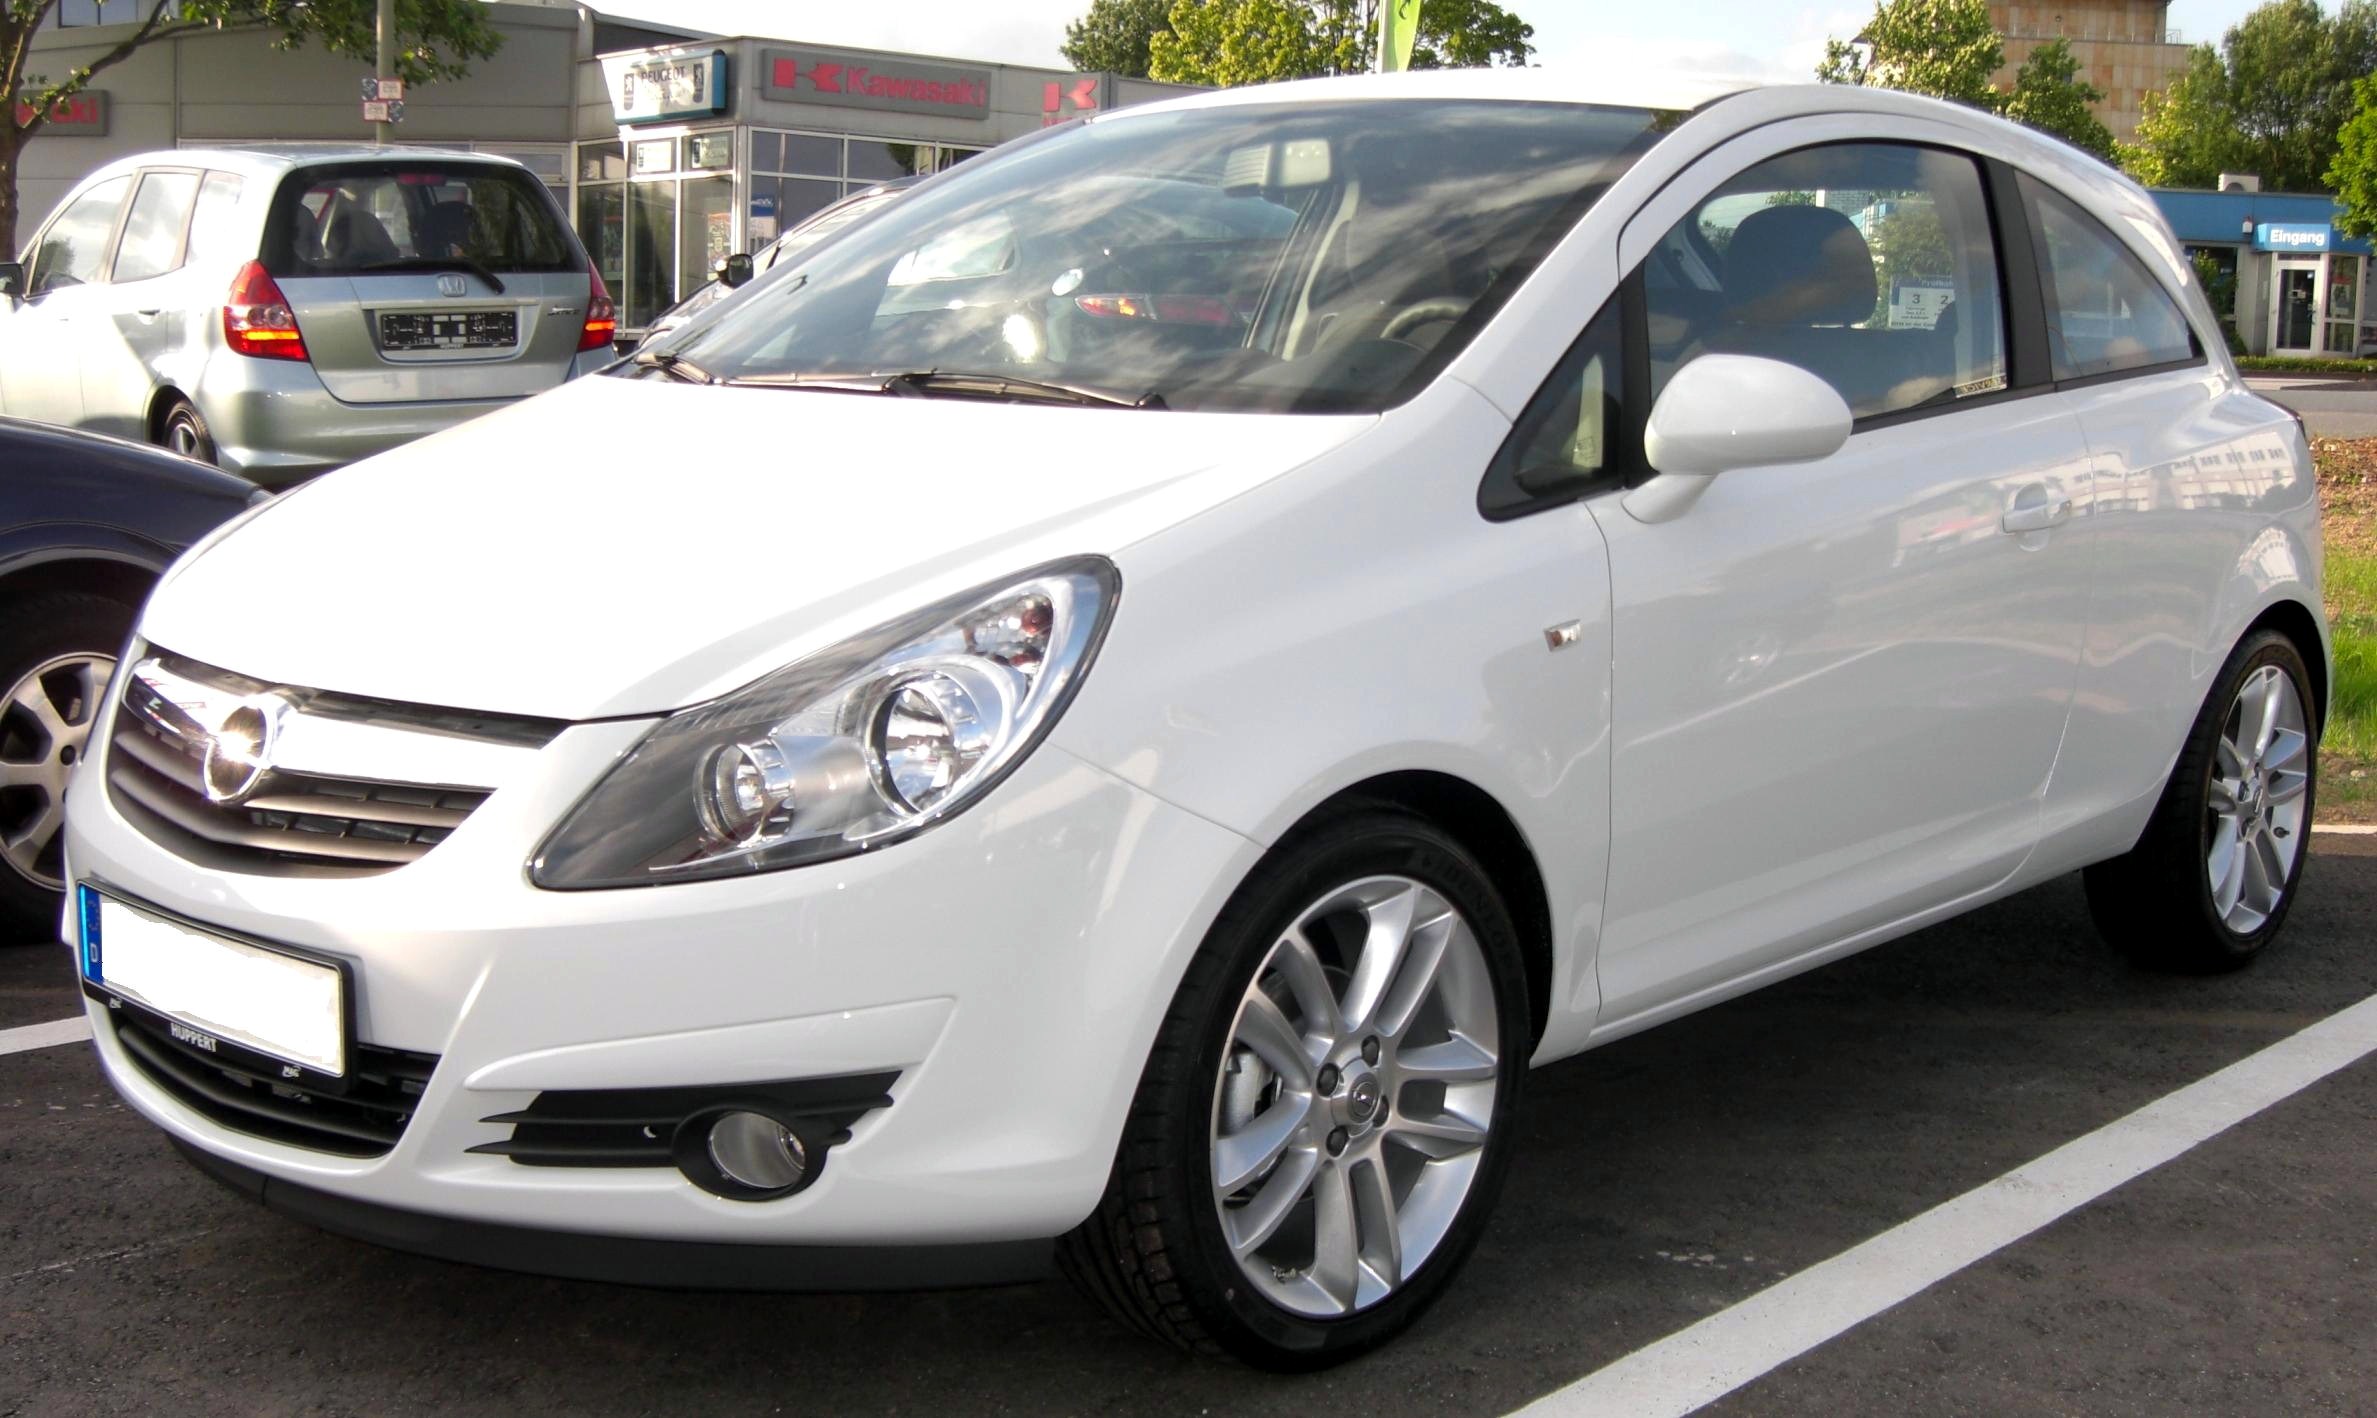 File:Opel Corsa D front.jpg